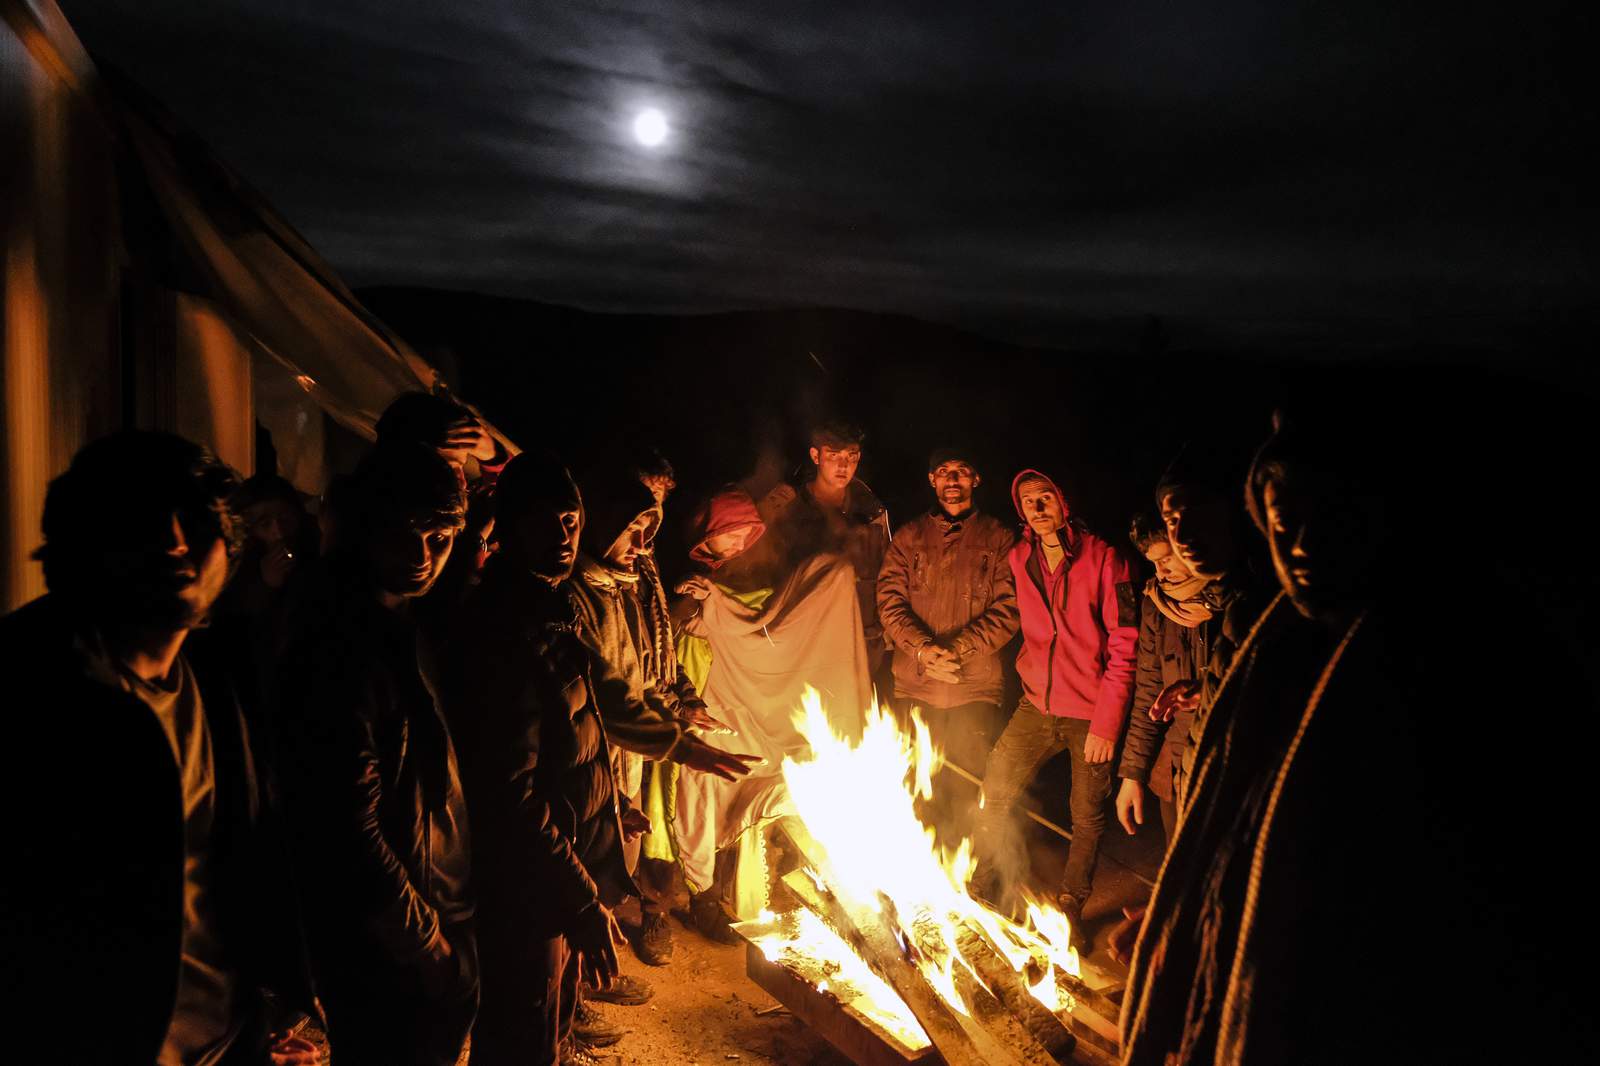 After criticism, Bosnia sets up tents for freezing migrants